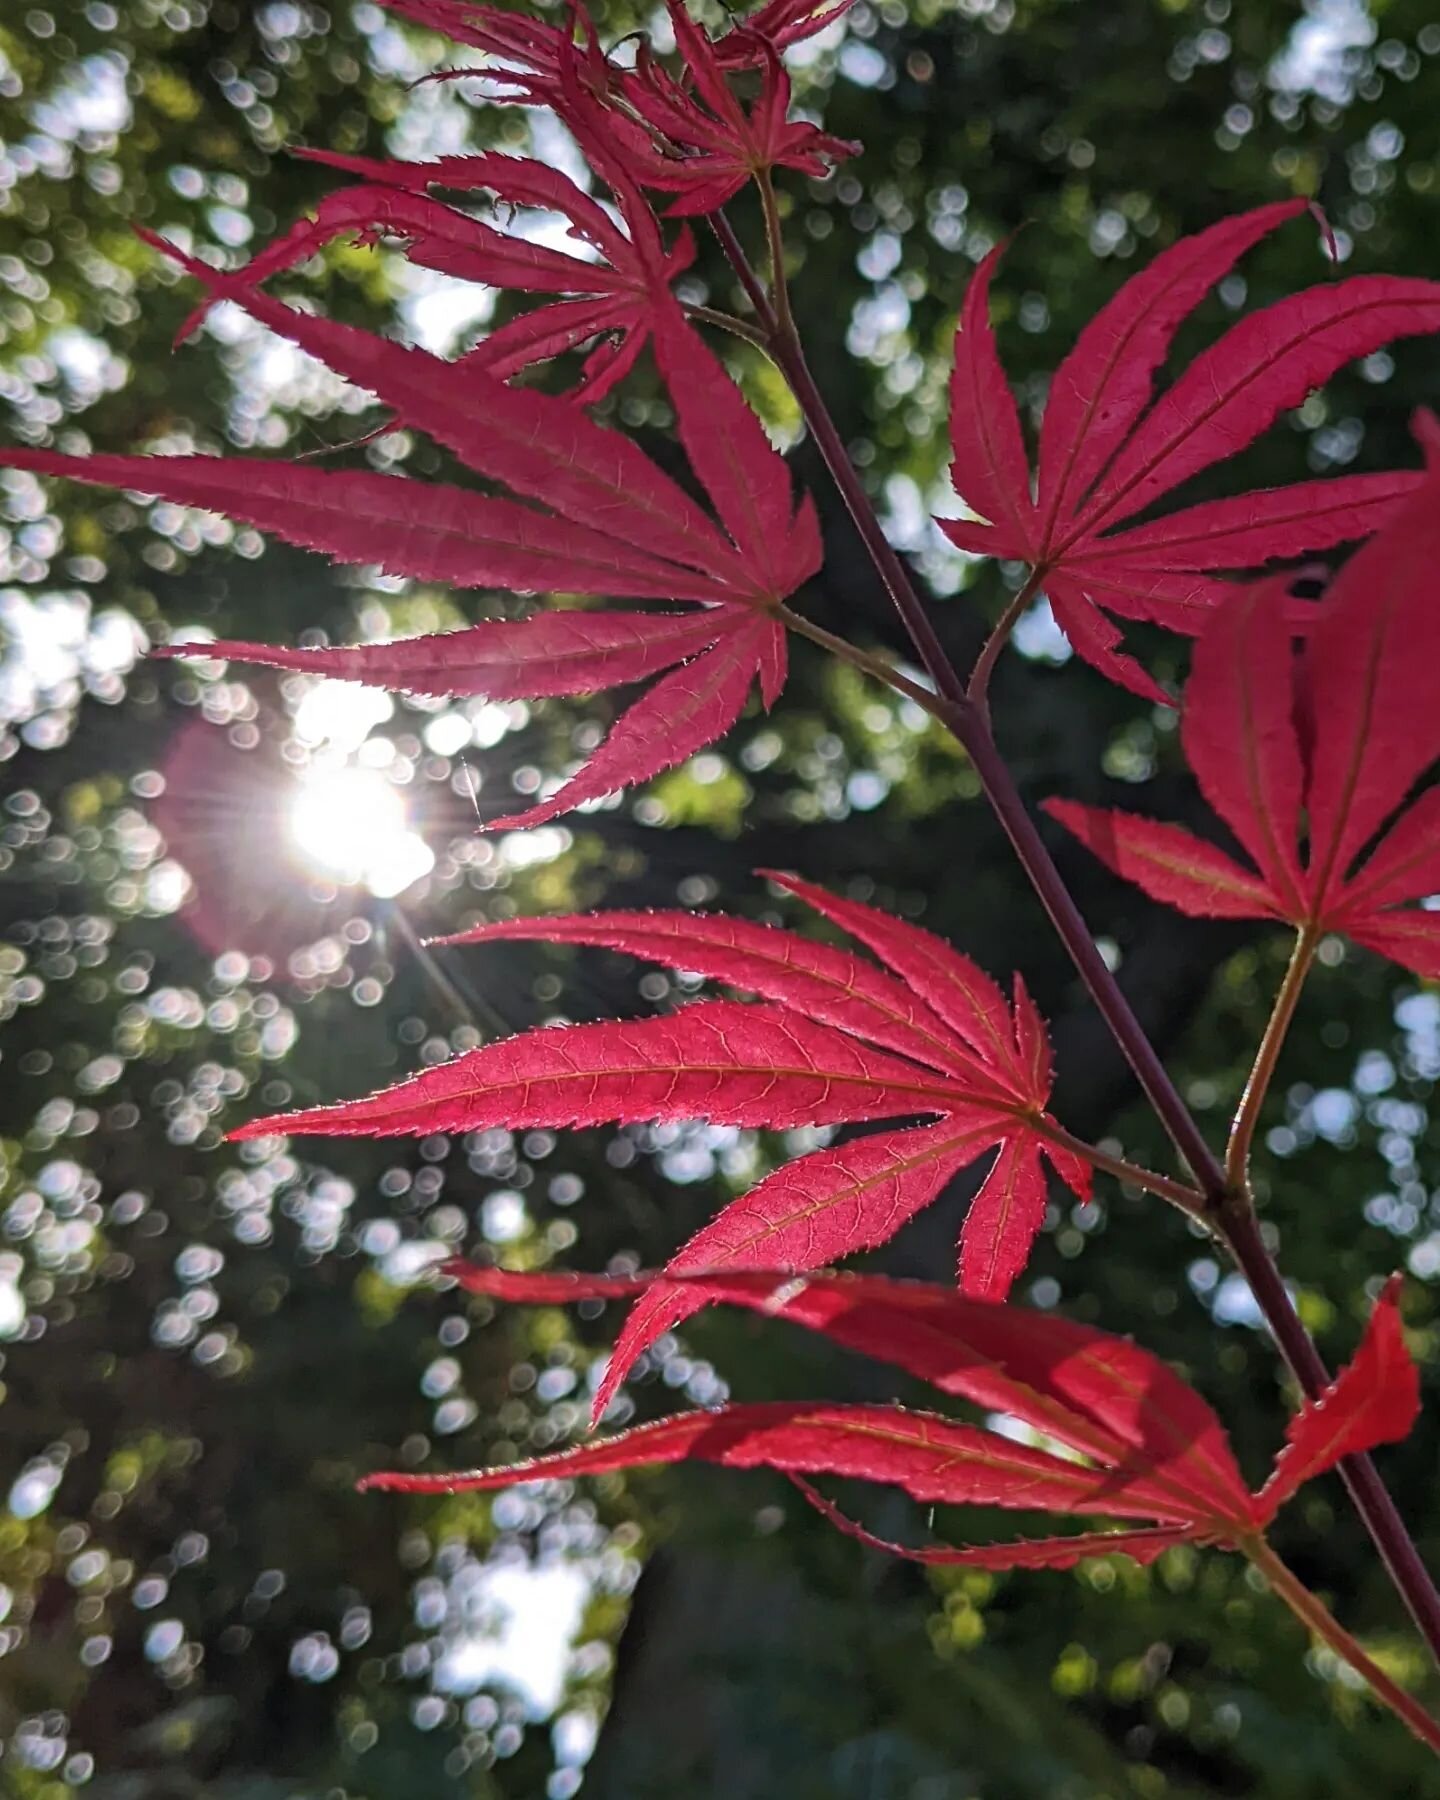 Spotlight on acer leaves.

10921 #japanesemaple #acerpalmatum #japonica #redleaves #redleaf